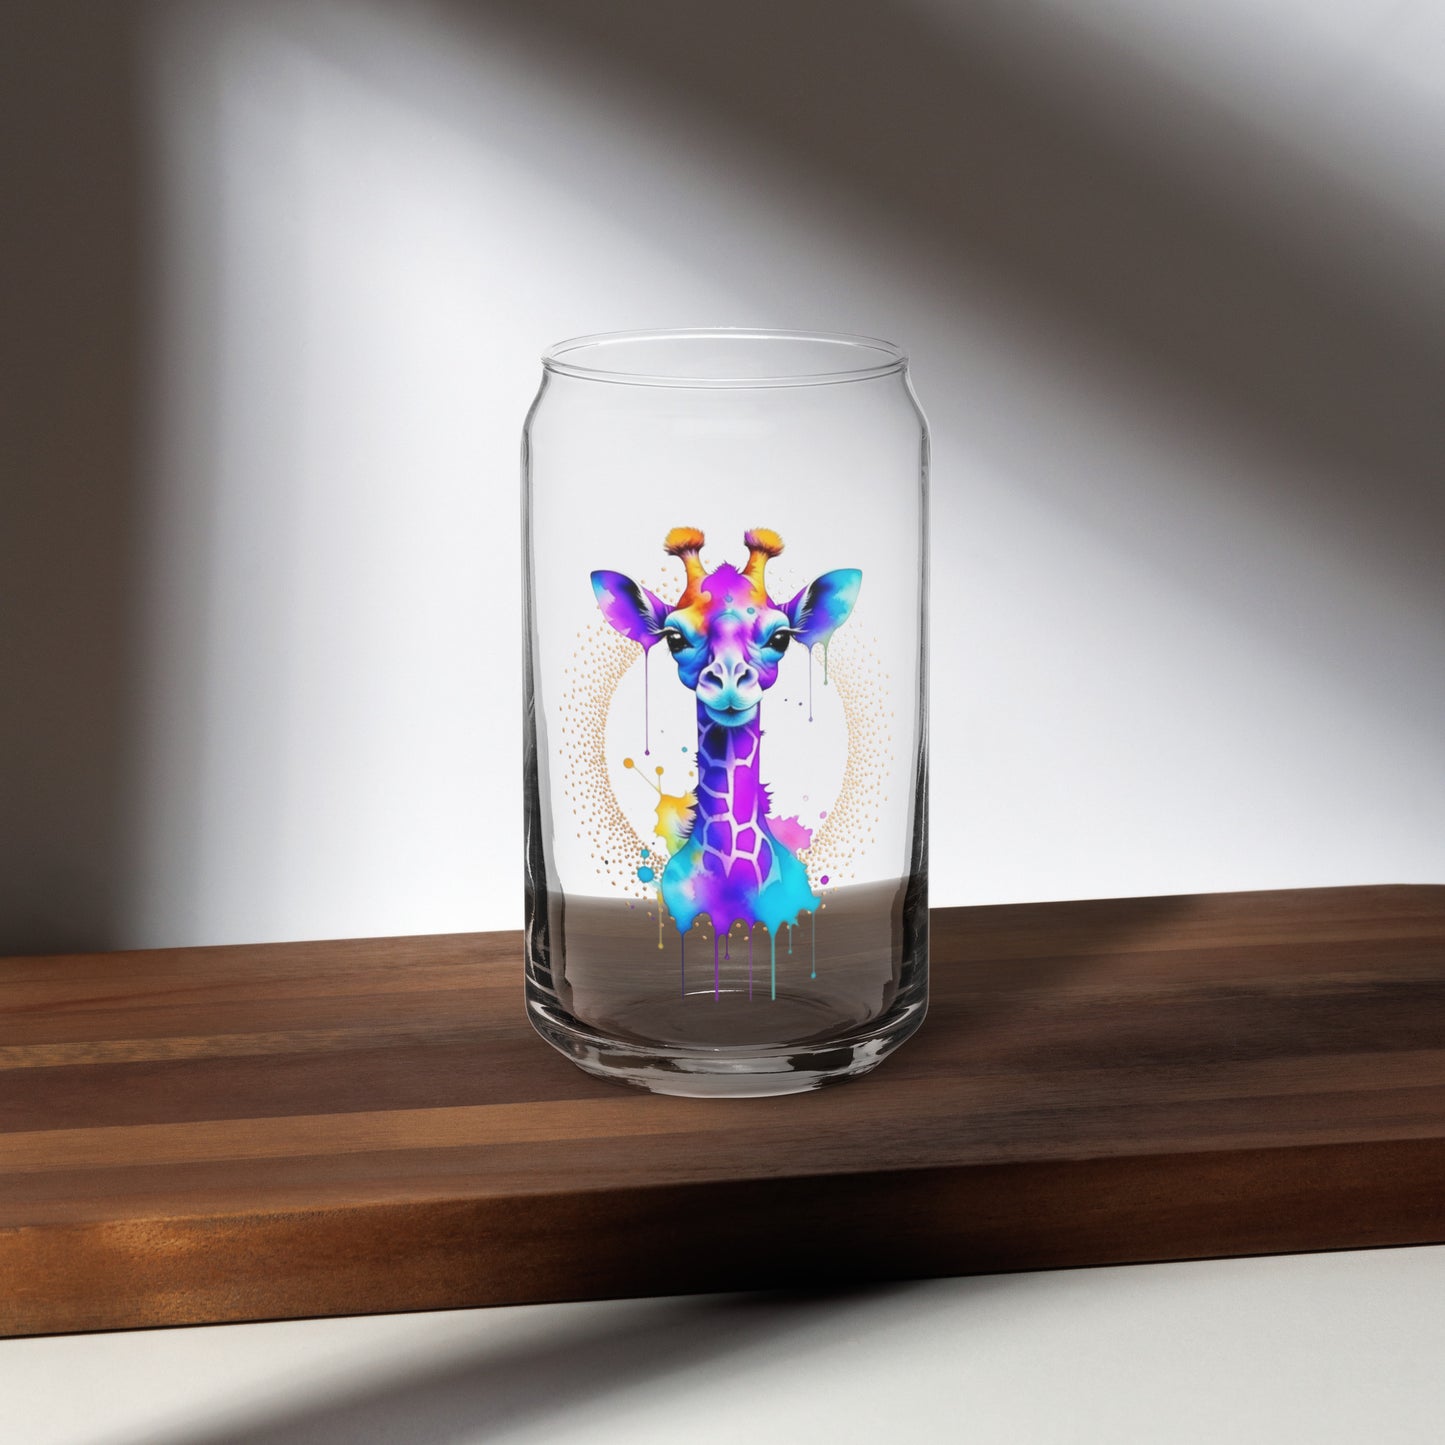 Vibrant Giraffe Can-shaped glass